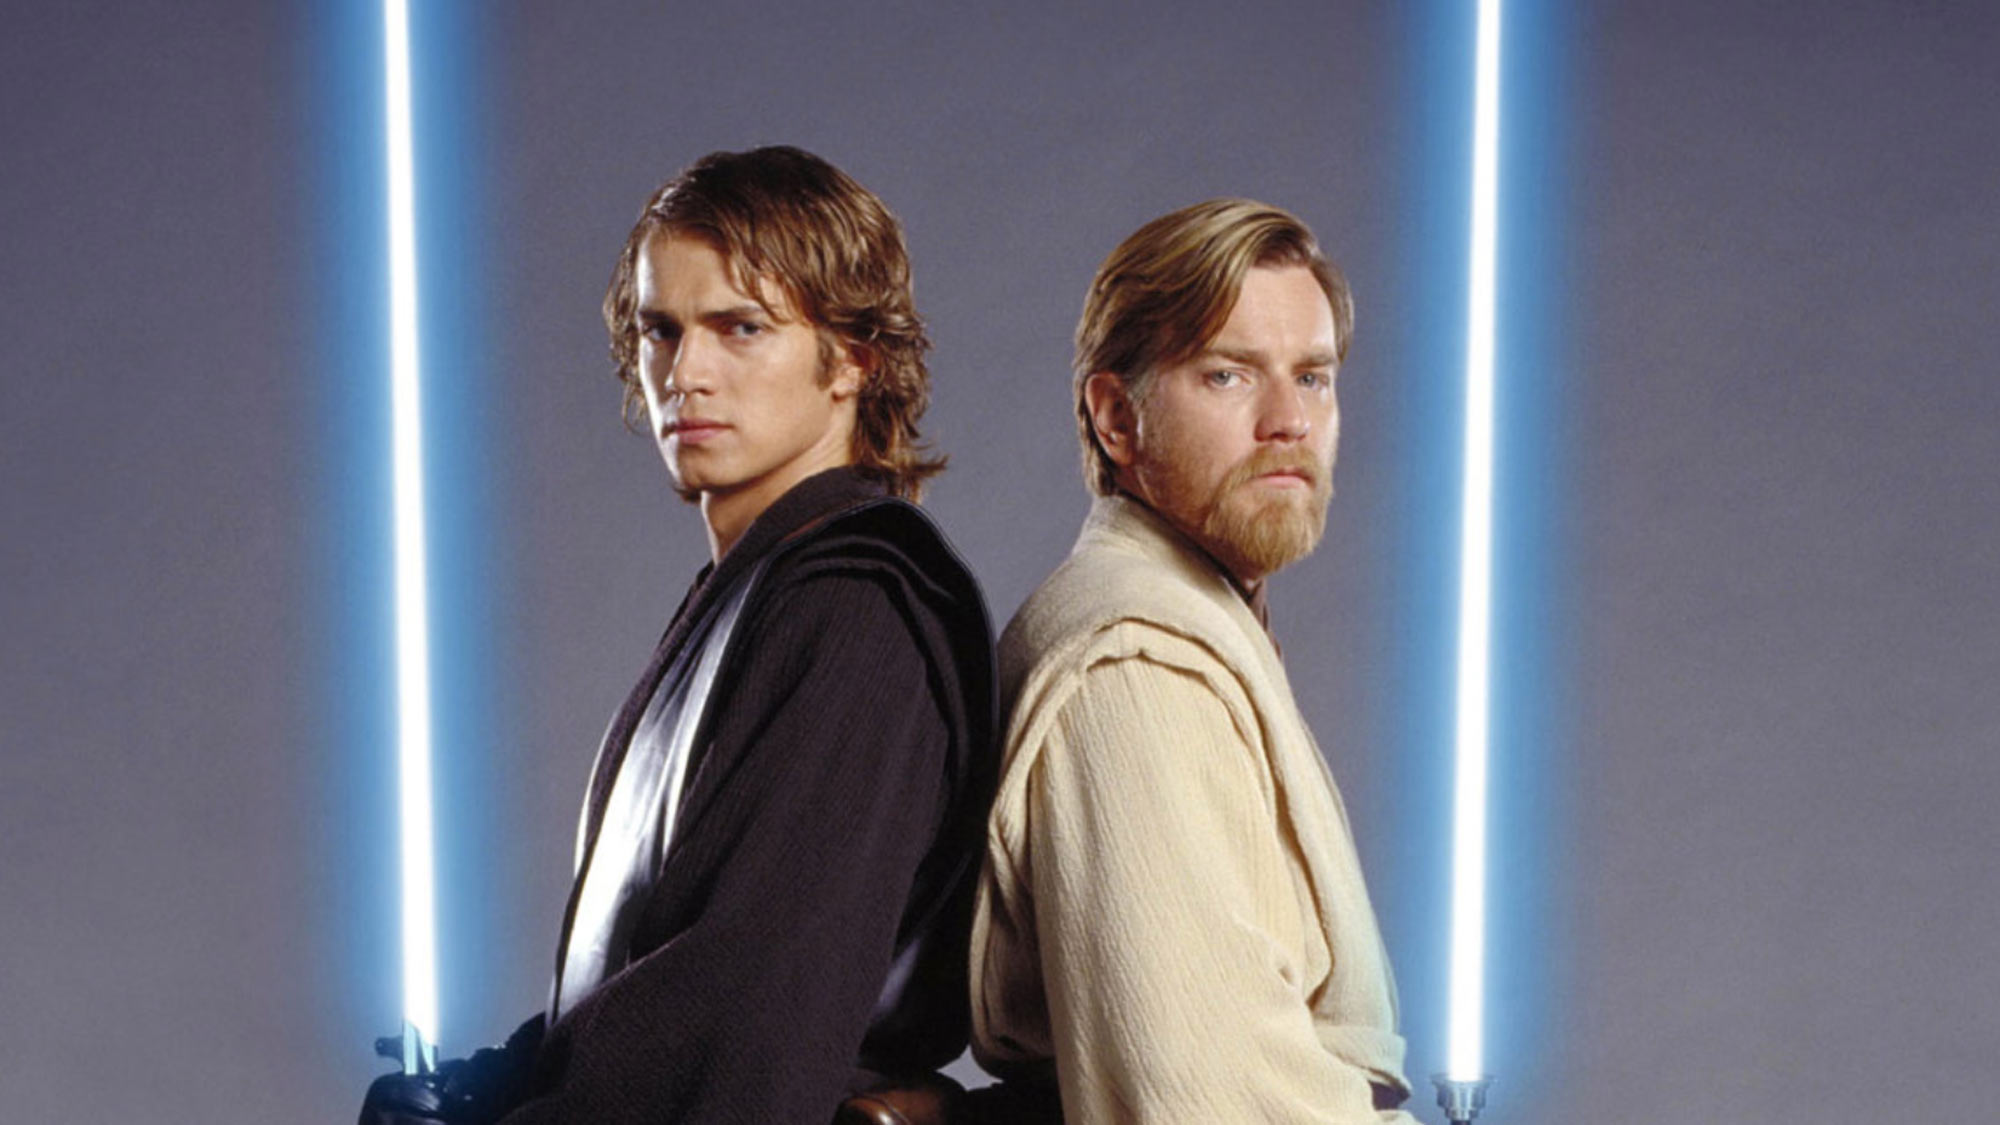 Obi-Wan Kenobi series on Disney Plus with Ewan McGregor and Hayden Christensen